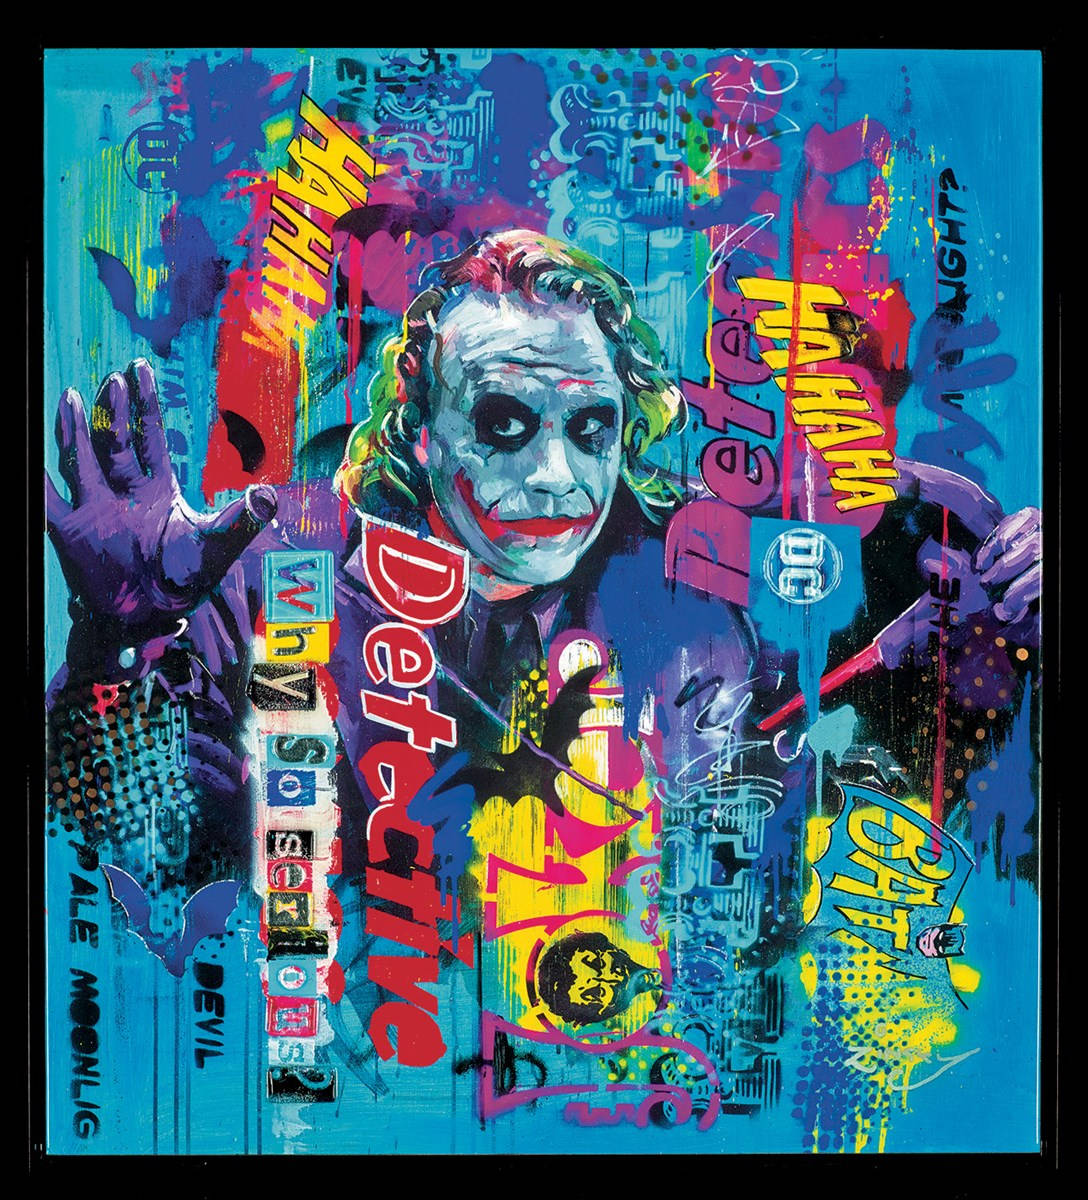 'Why So Serious?' - The Joker Wallpaper